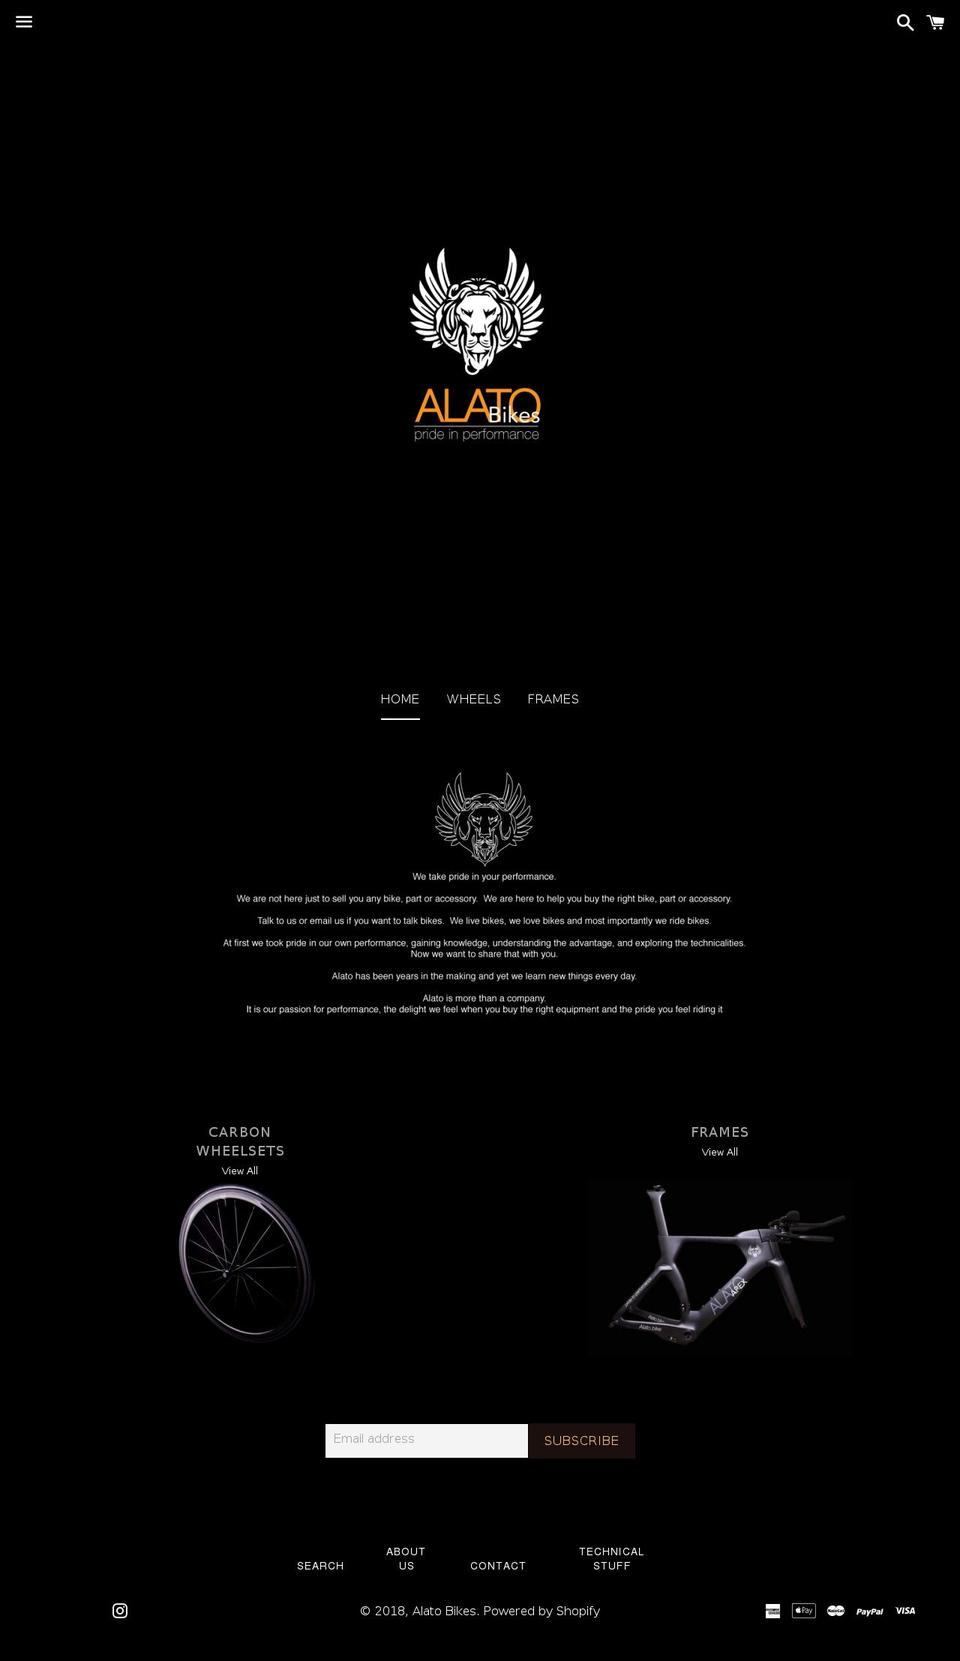 alato.bike shopify website screenshot